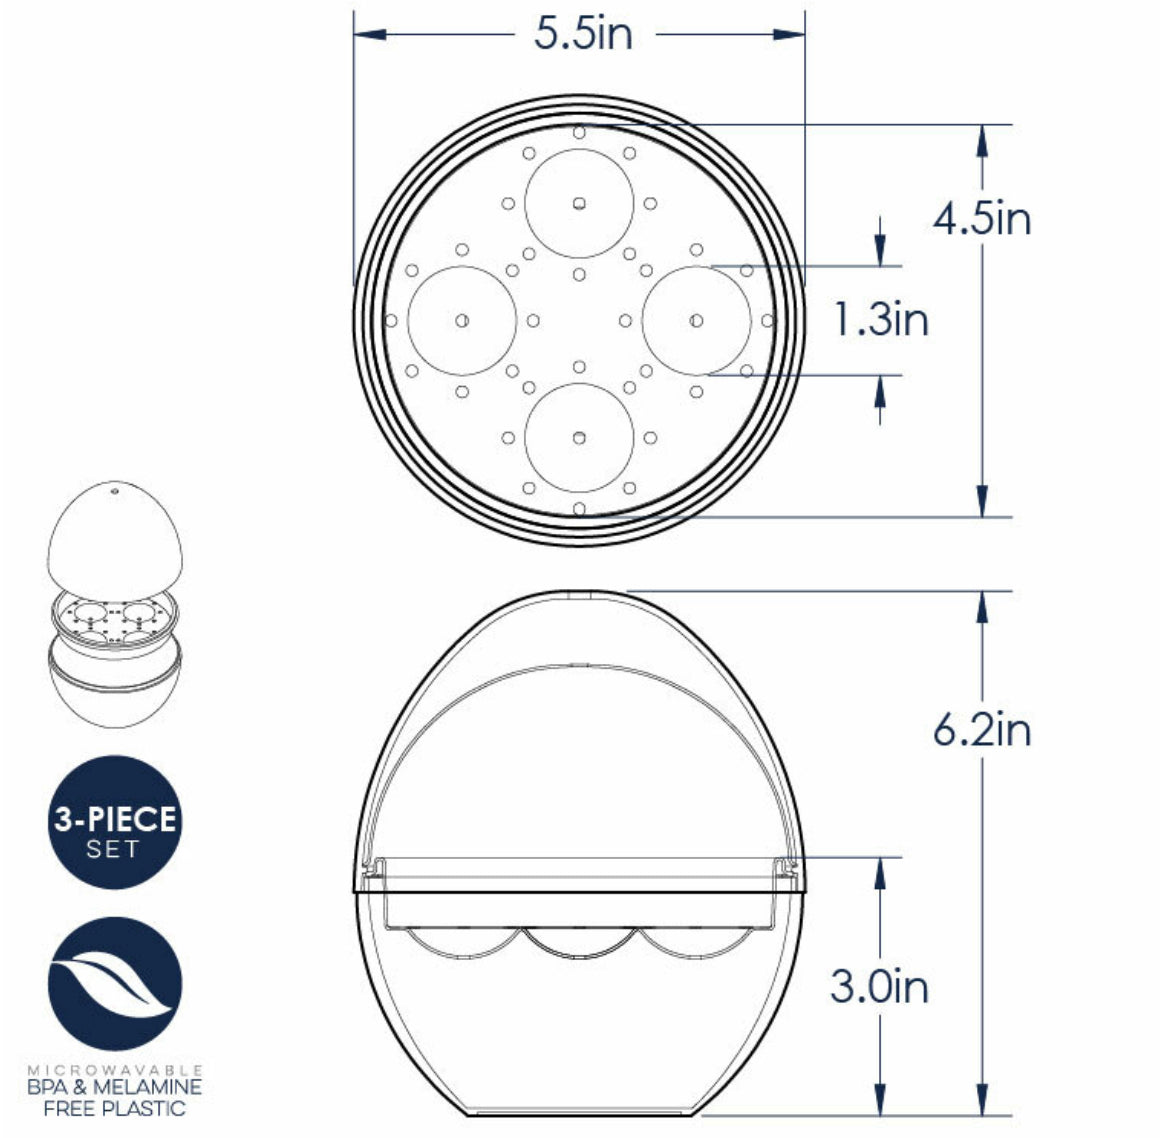 Nordic Ware Microwave Egg Boiler dimensions